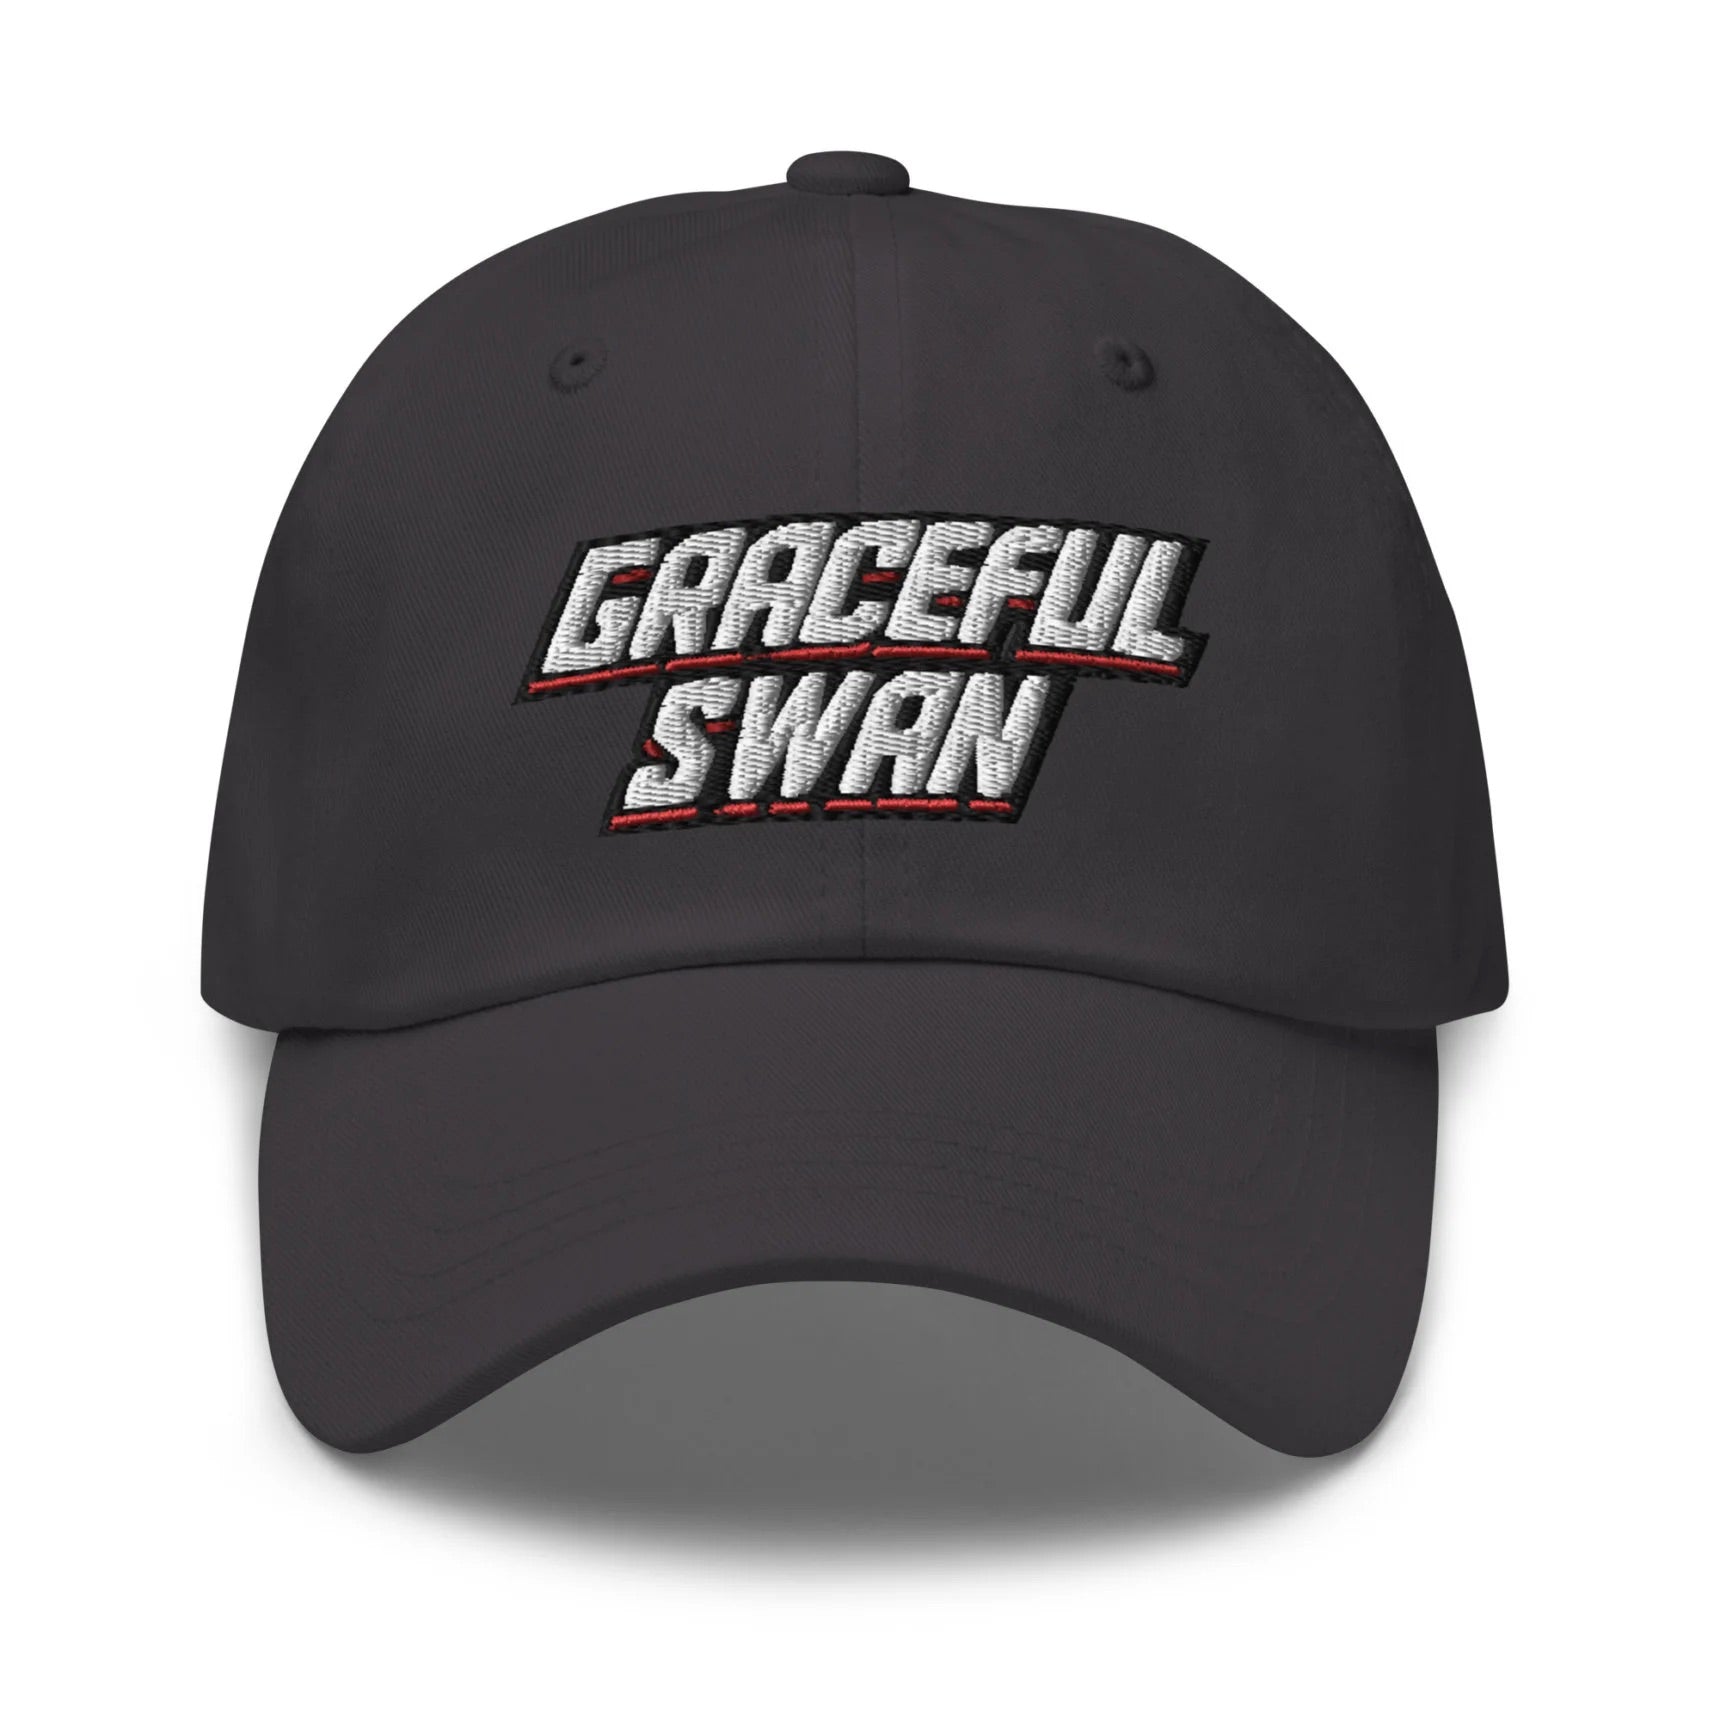 Graceful Swan ShowZone baseball dad hat in dark grey